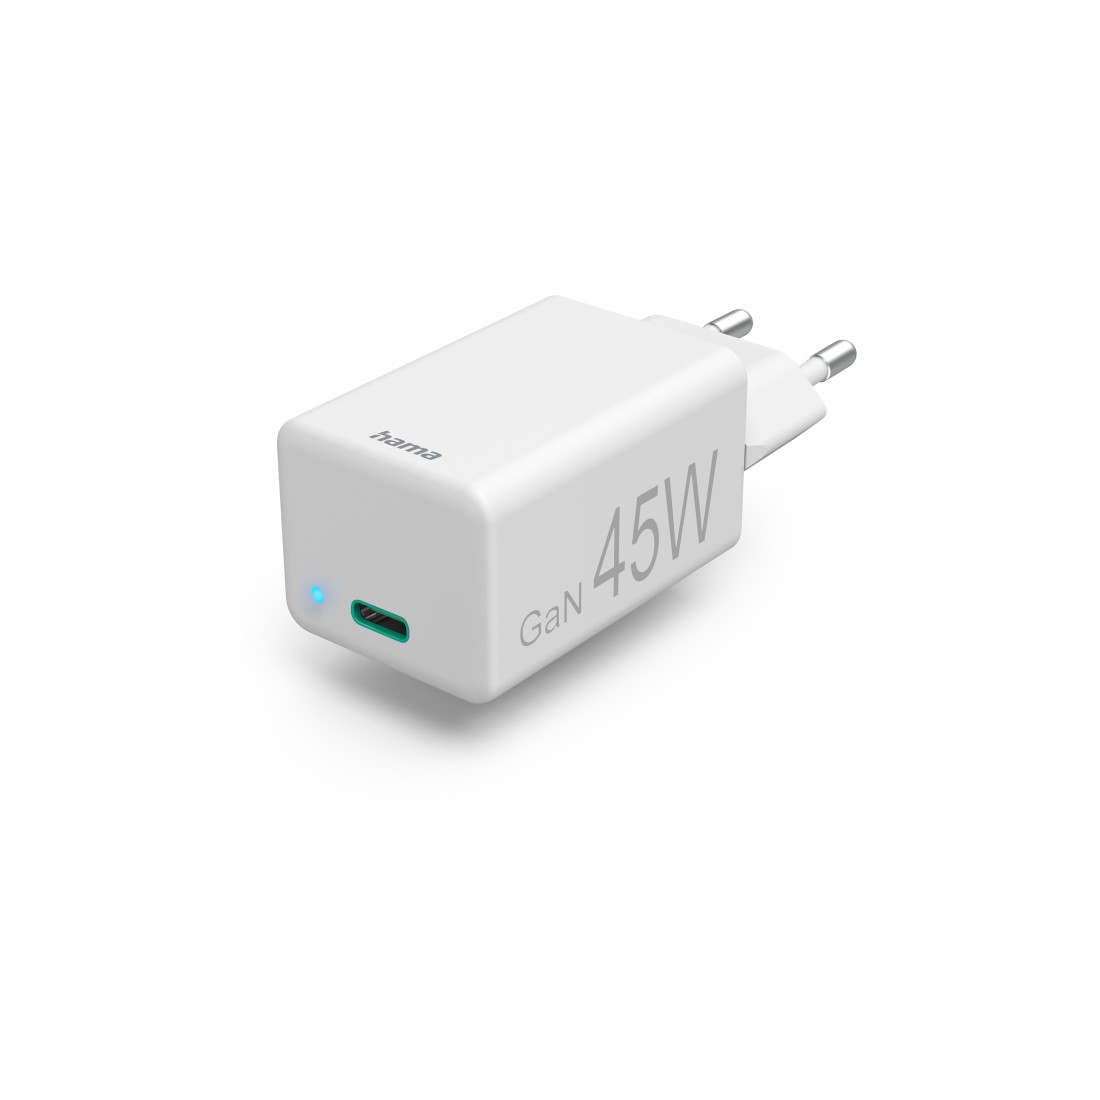 Hama Schnellladegerät, USB-C, PD/Qualcomm®/GaN, Mini-Ladegerät, 45 W, Weiß